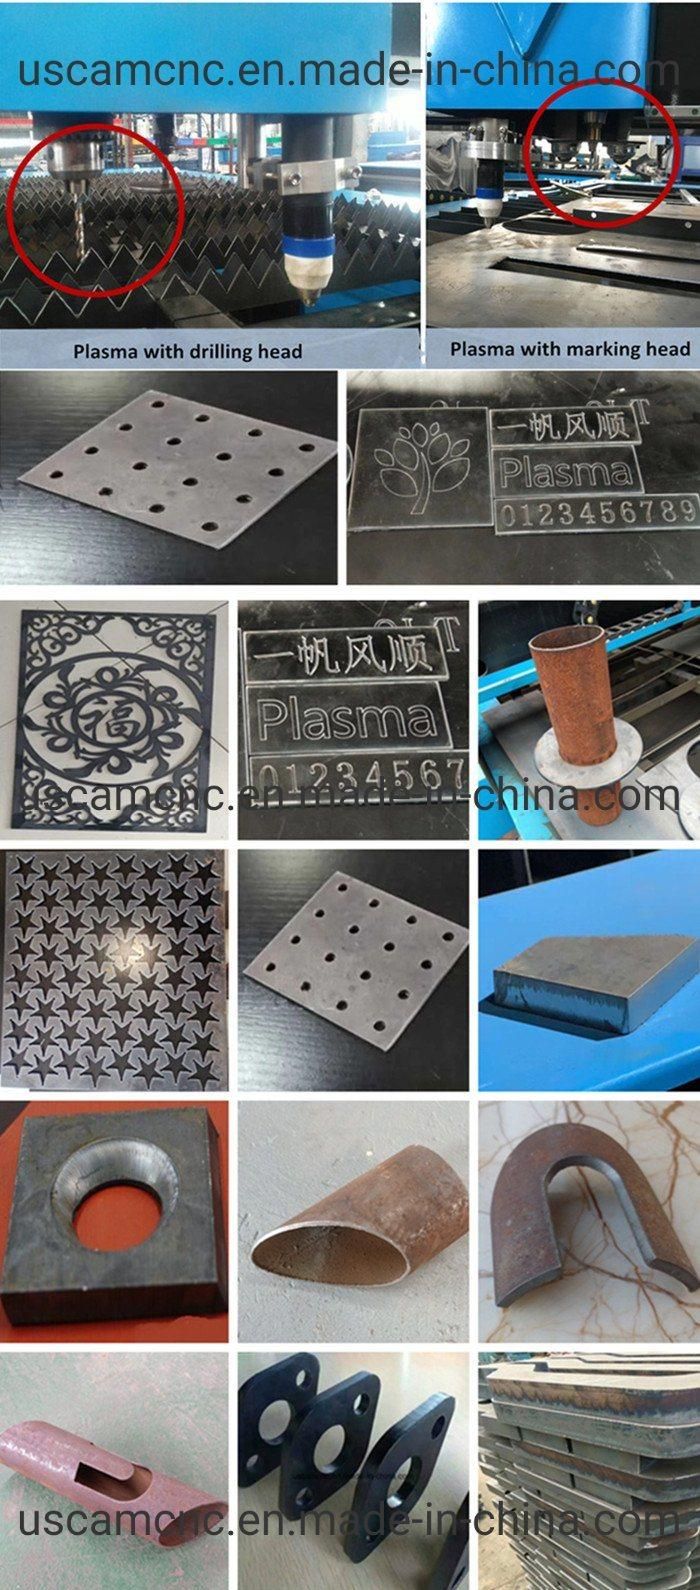 China Factory Price CNC Plasma Cutter Price 1325 1530 CNC Plasma Cutting Machine for Steel Plate